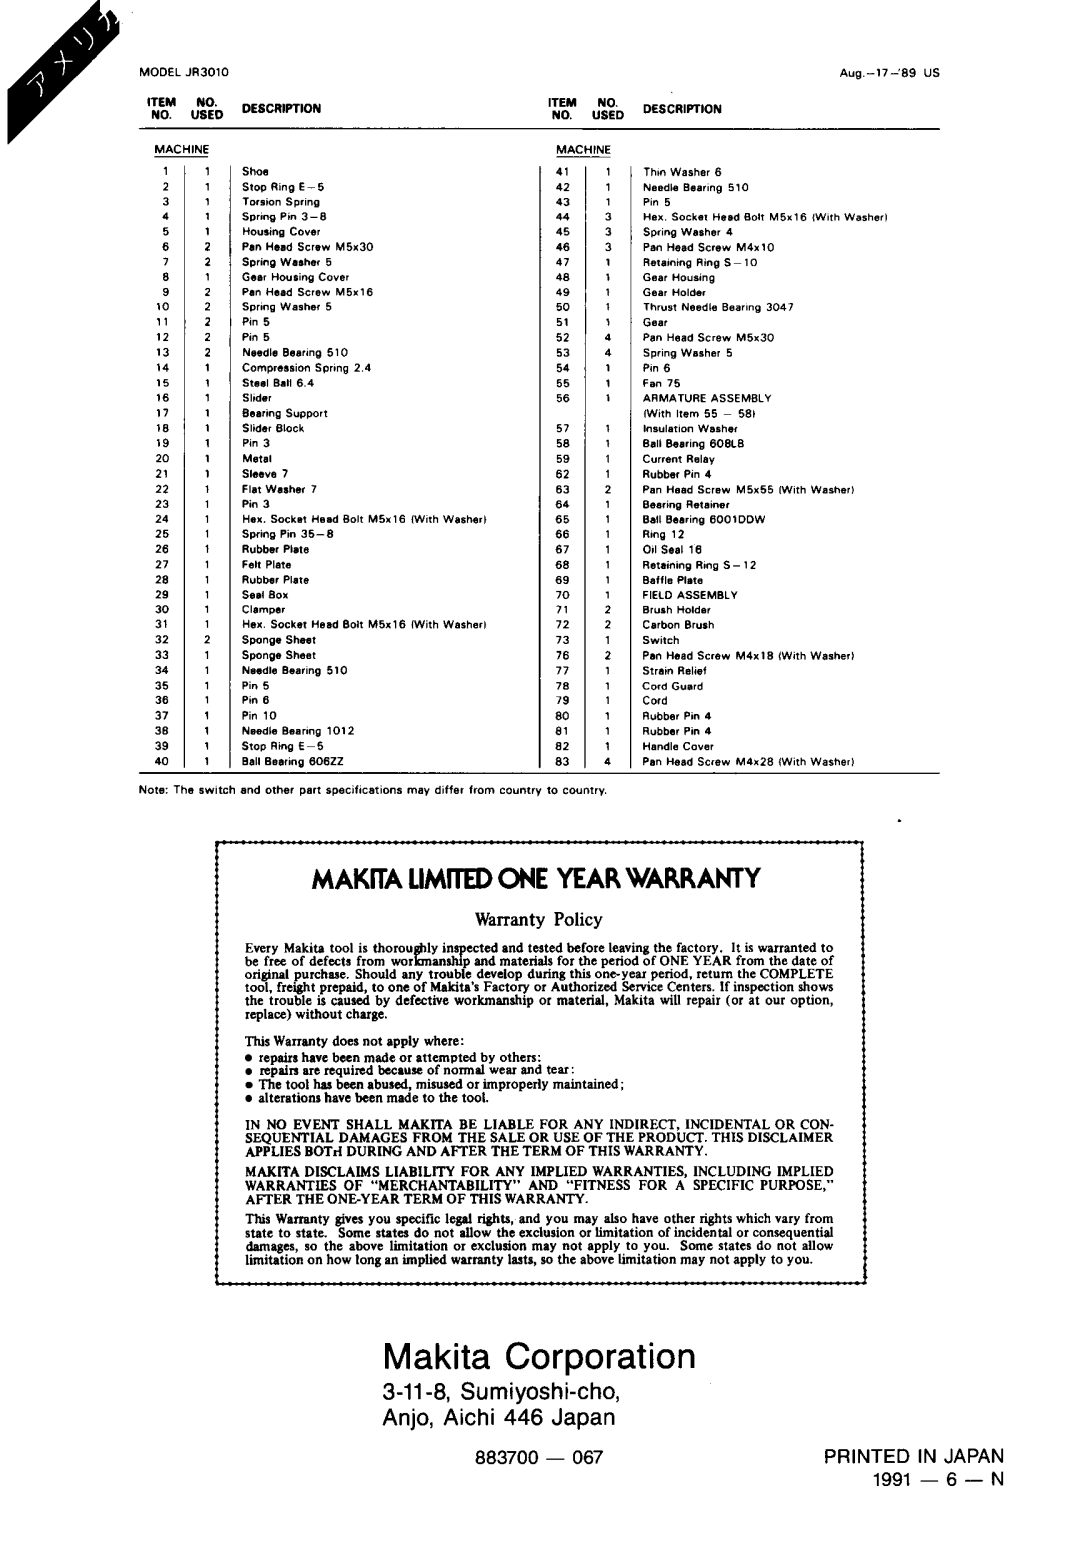 Makita JR3010 MAKKA LIMrrED ONE YEAR WARRANTY, Makita Corporation, 1991 - 6 - N, Warranty Policy, 883700, Printed In Japan 